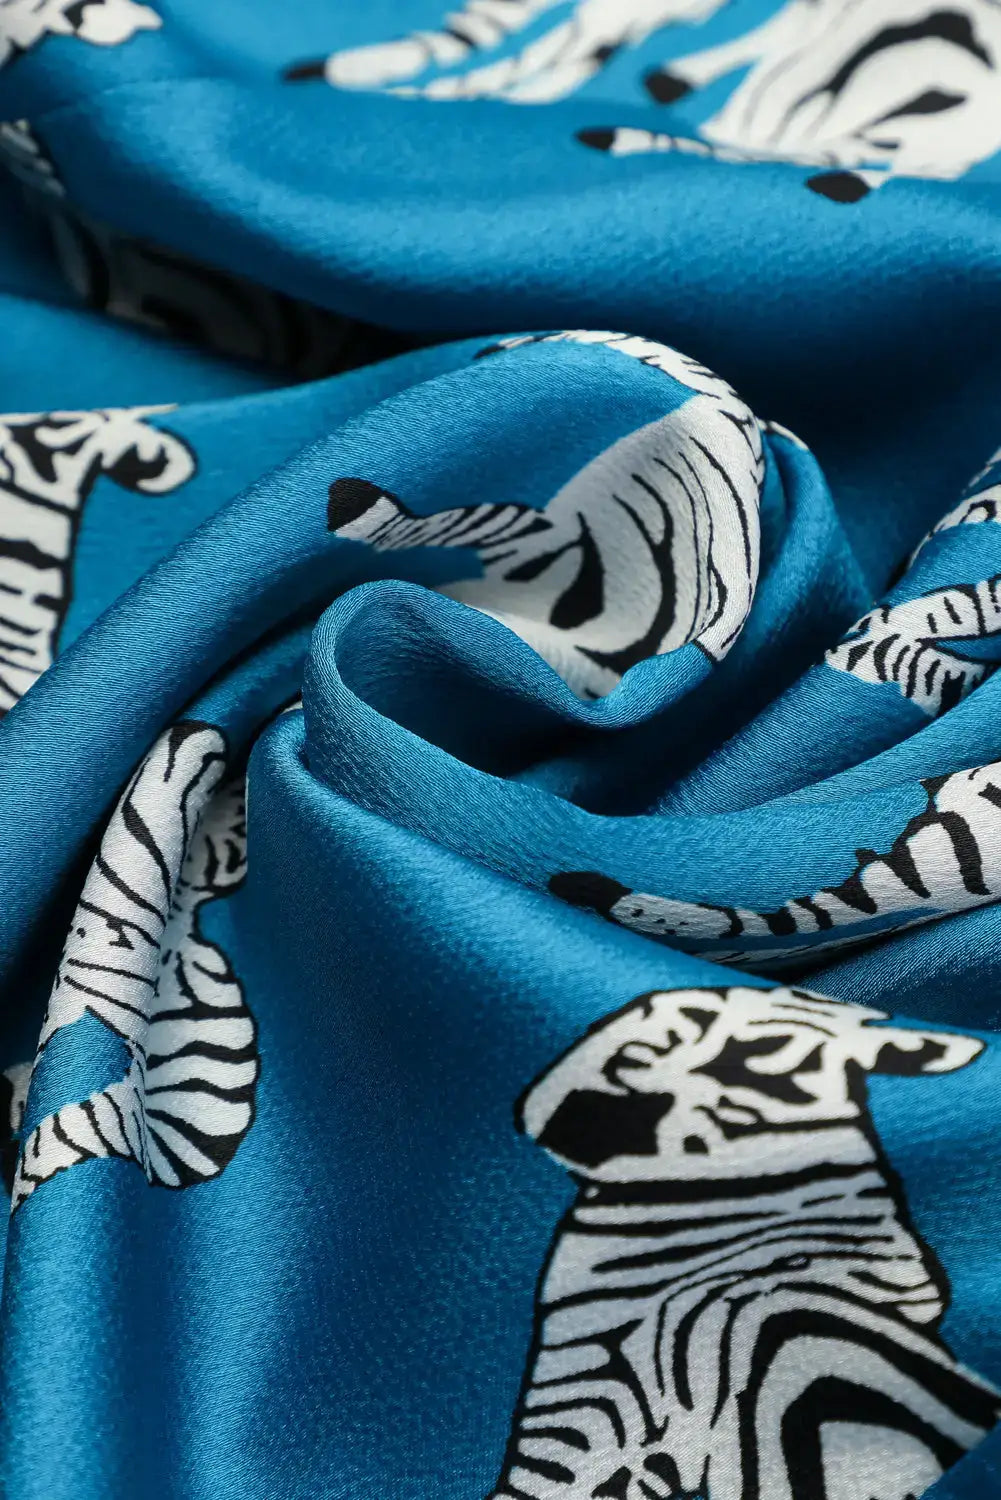 Blue printed zebra pattern pleated shirt tunic dress - dresses